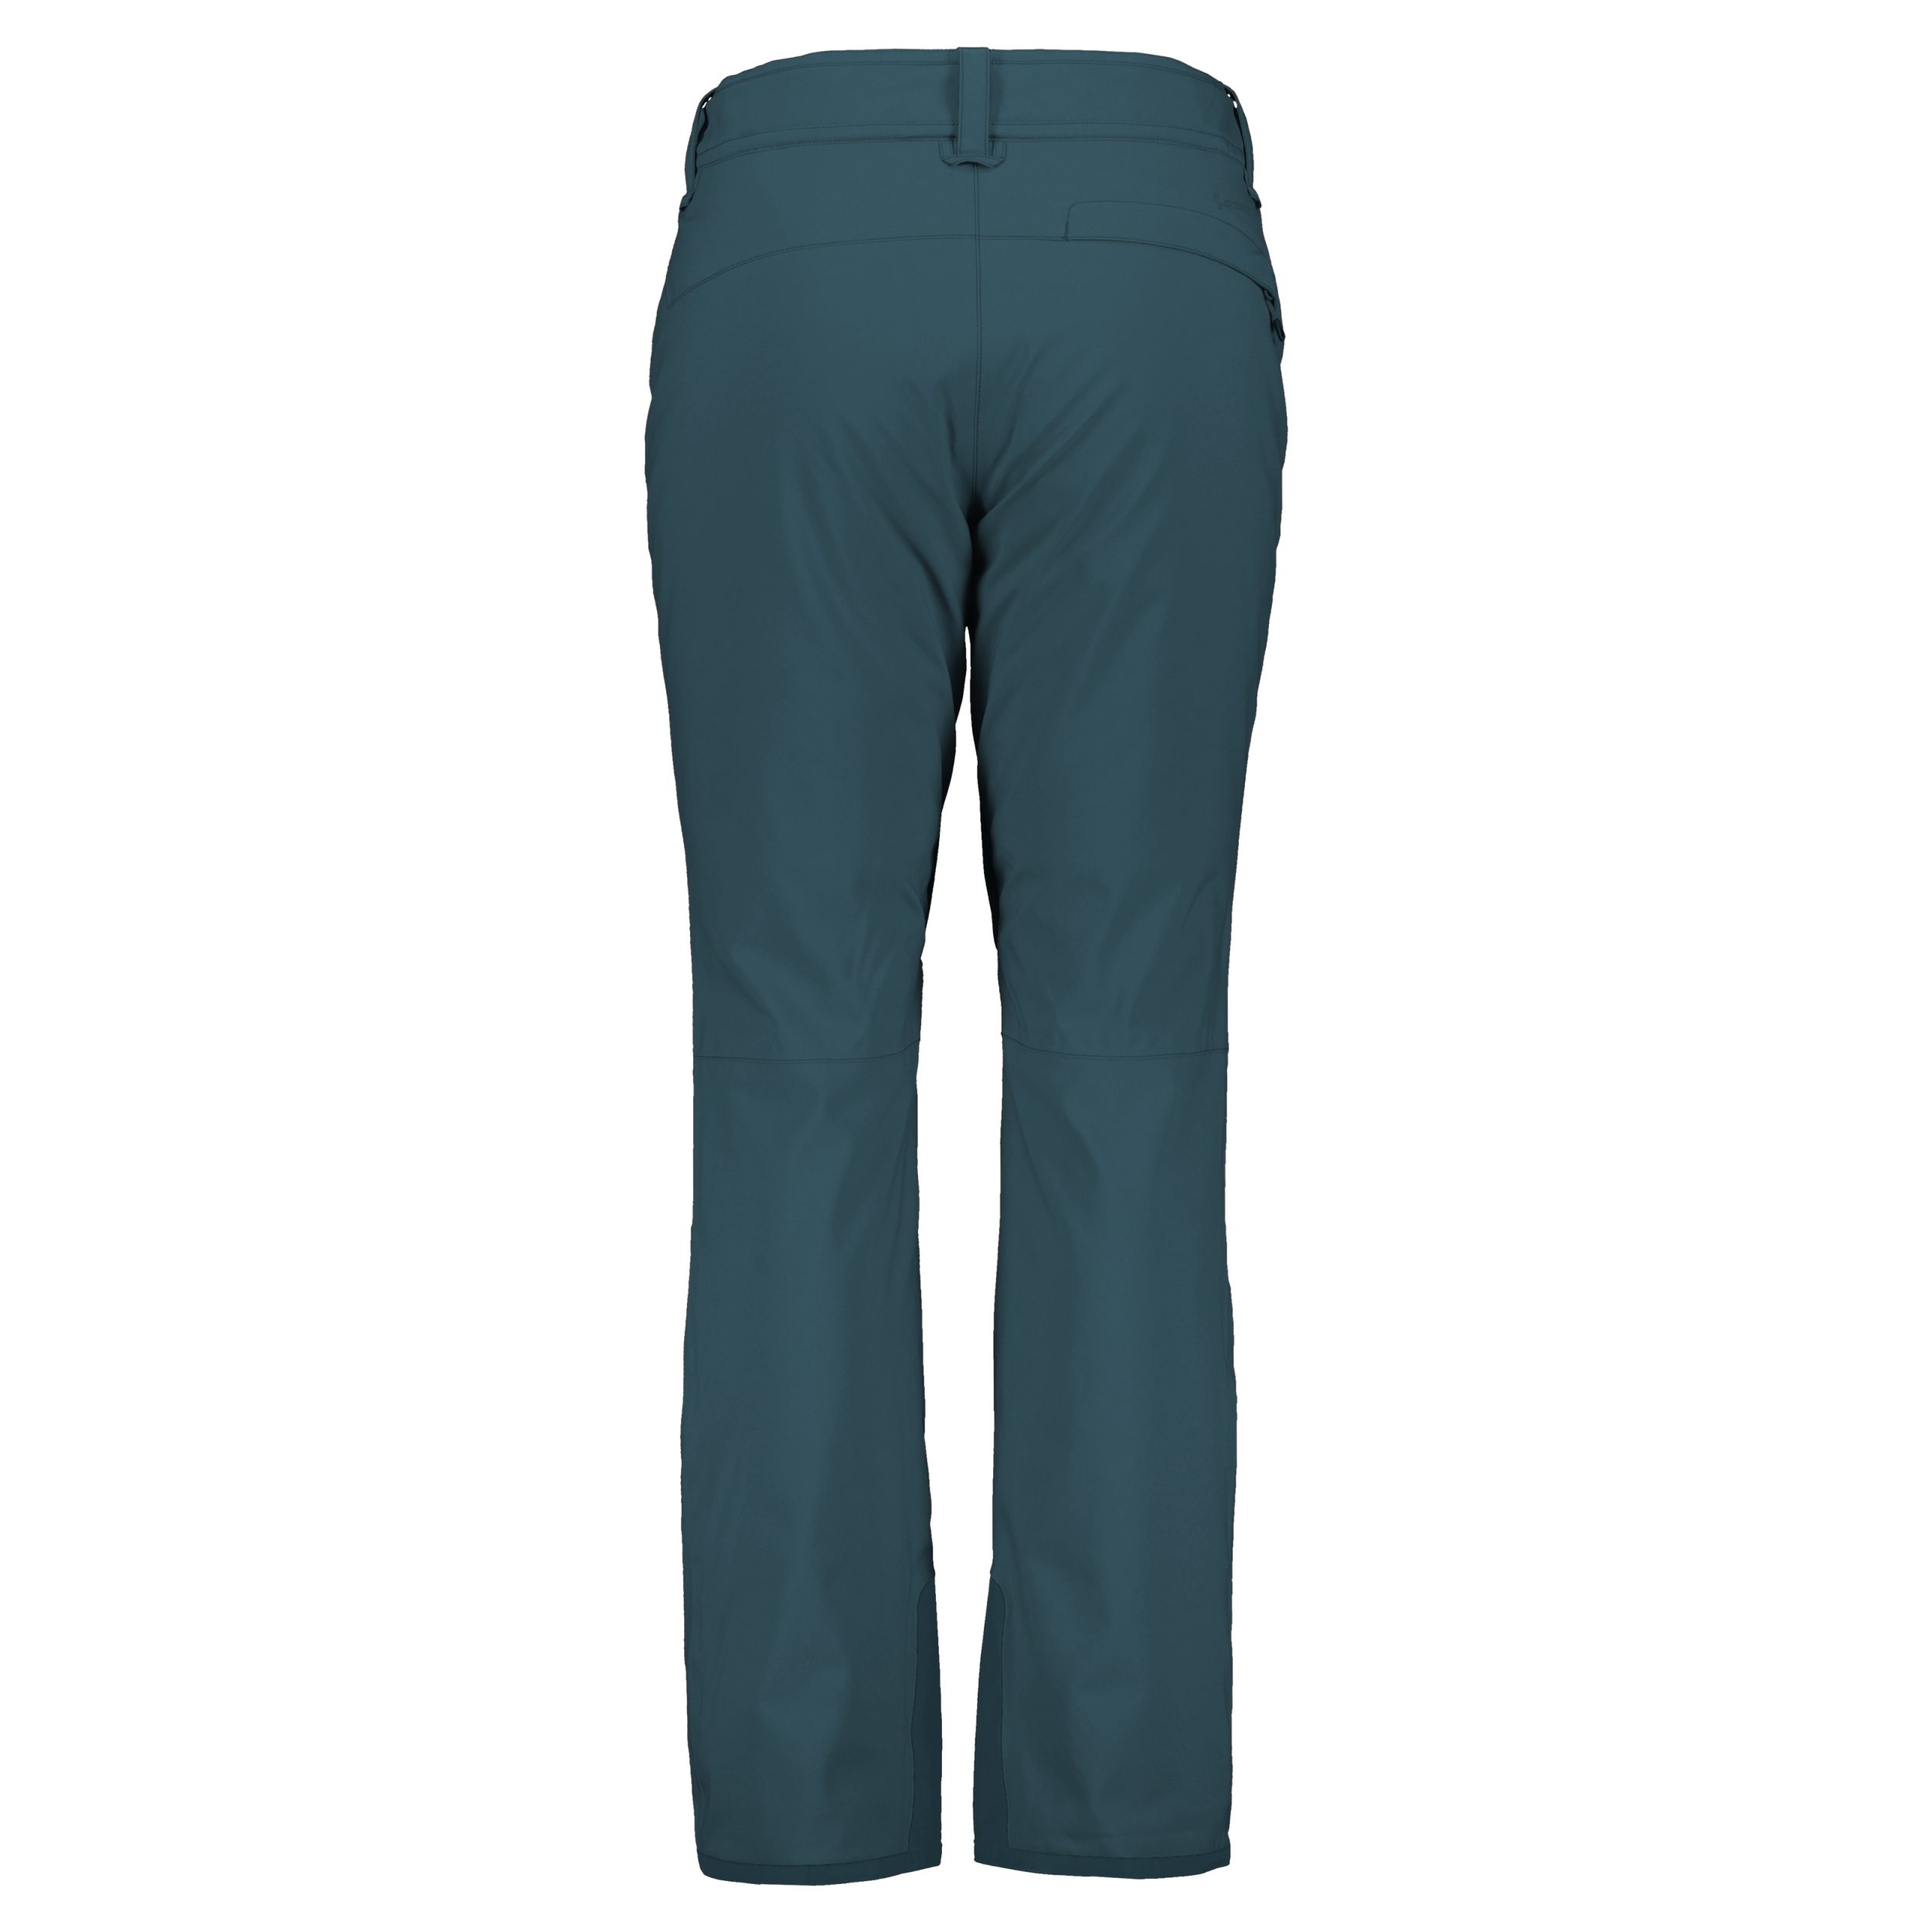 Skihose 10 Scott W's 7334 Ultimate Pants green Dryo SCO aruba